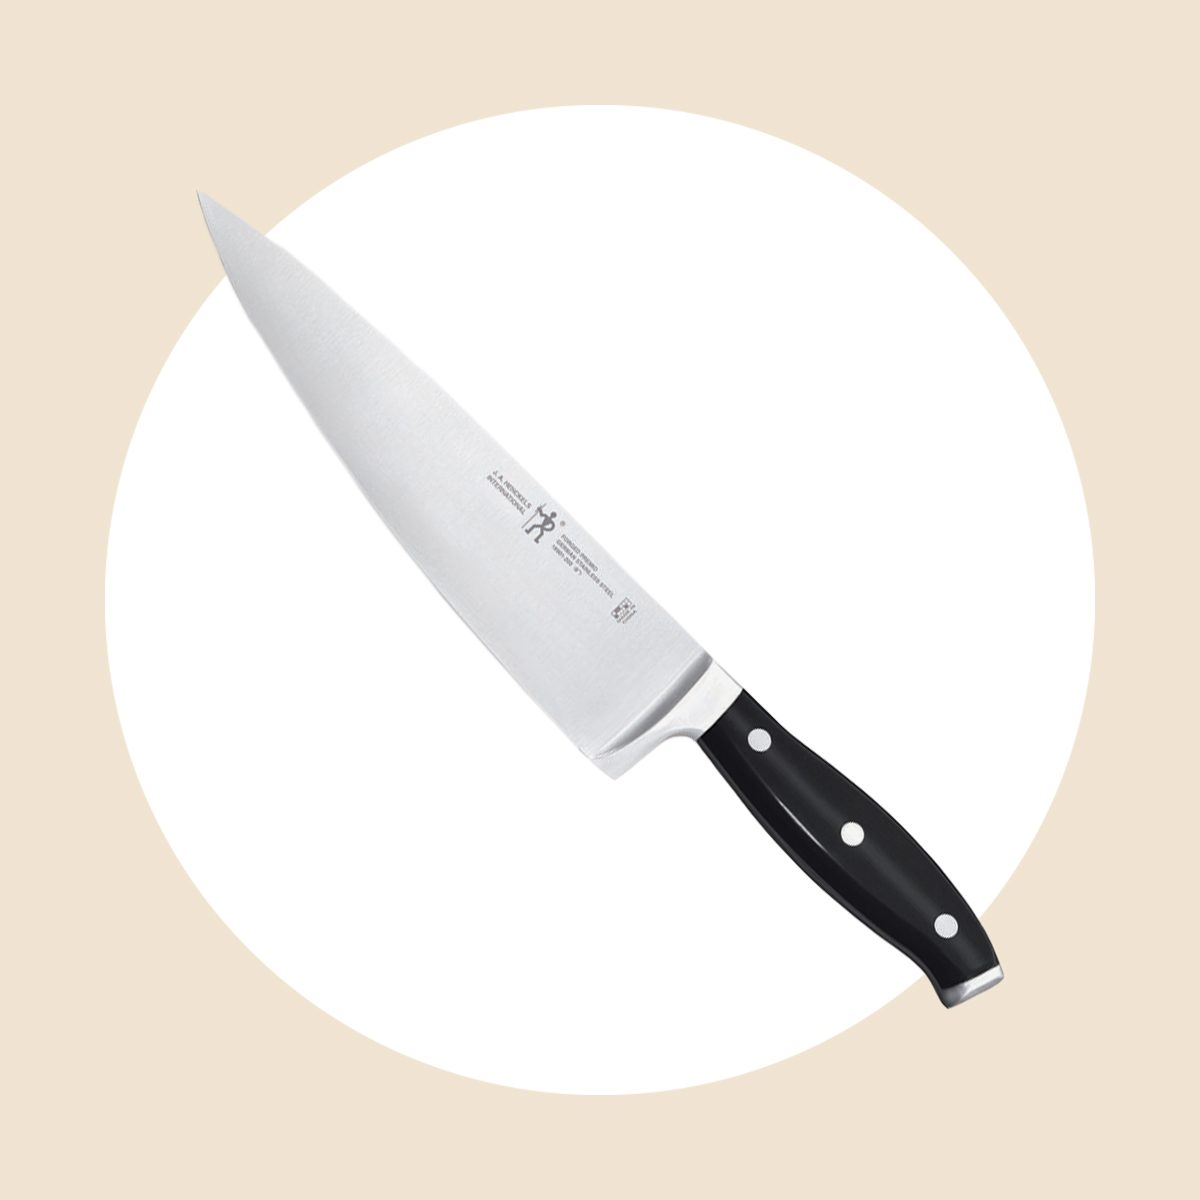 https://www.tasteofhome.com/wp-content/uploads/2022/04/ja-henckels-chef-knife-via-zwilling.com-ecomm.jpg?fit=700%2C700